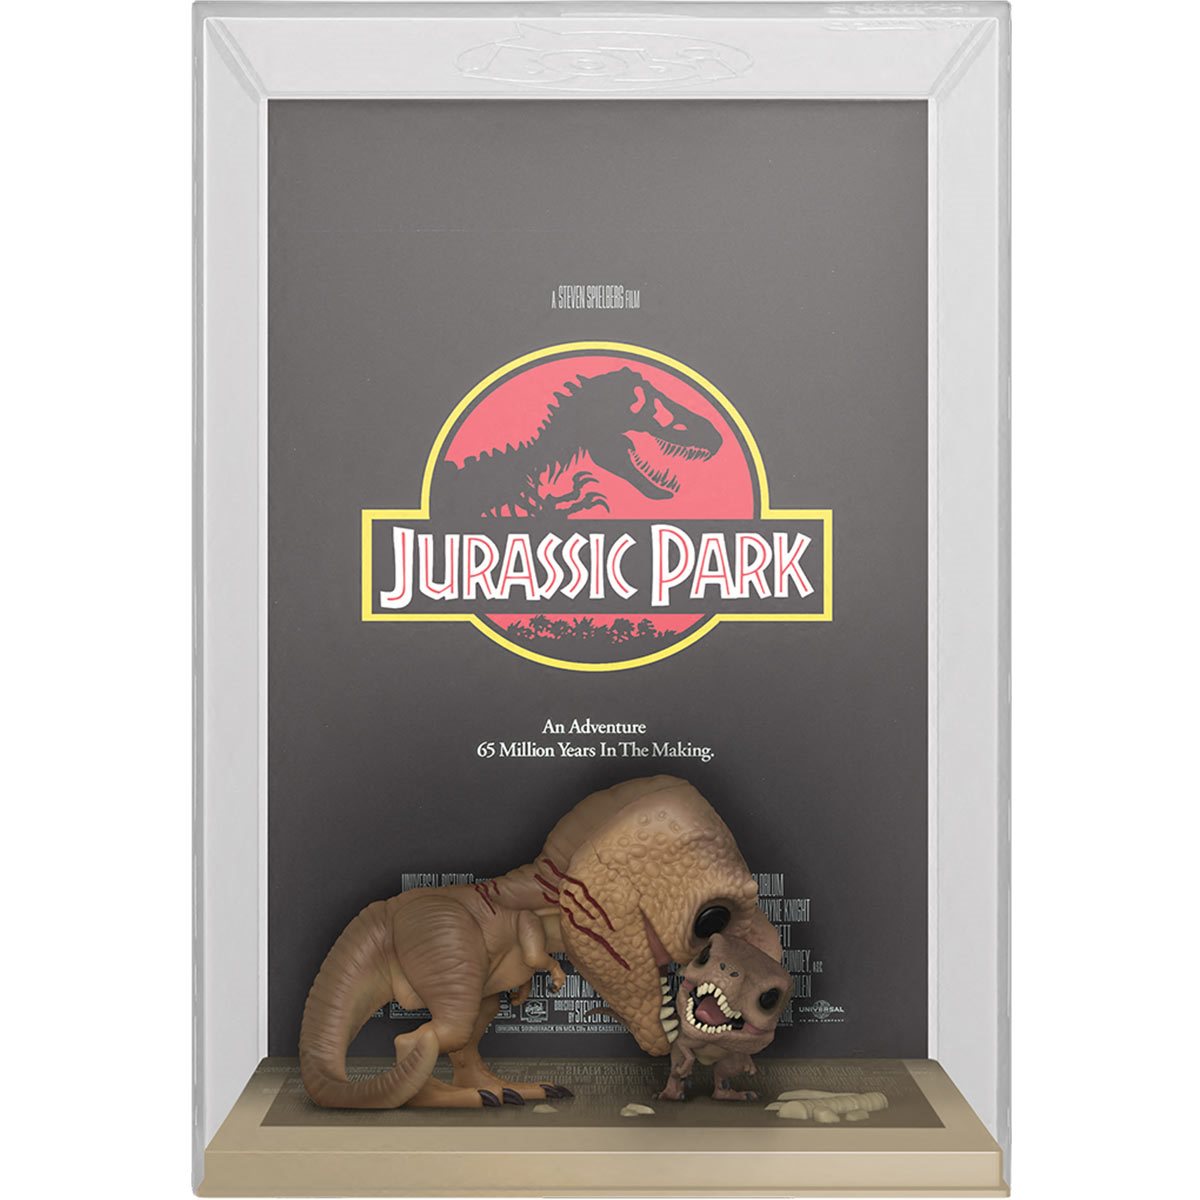 POP! Jurassic Park: Tyrannosaurus Rex and Velociraptor! Movie Poster with Case